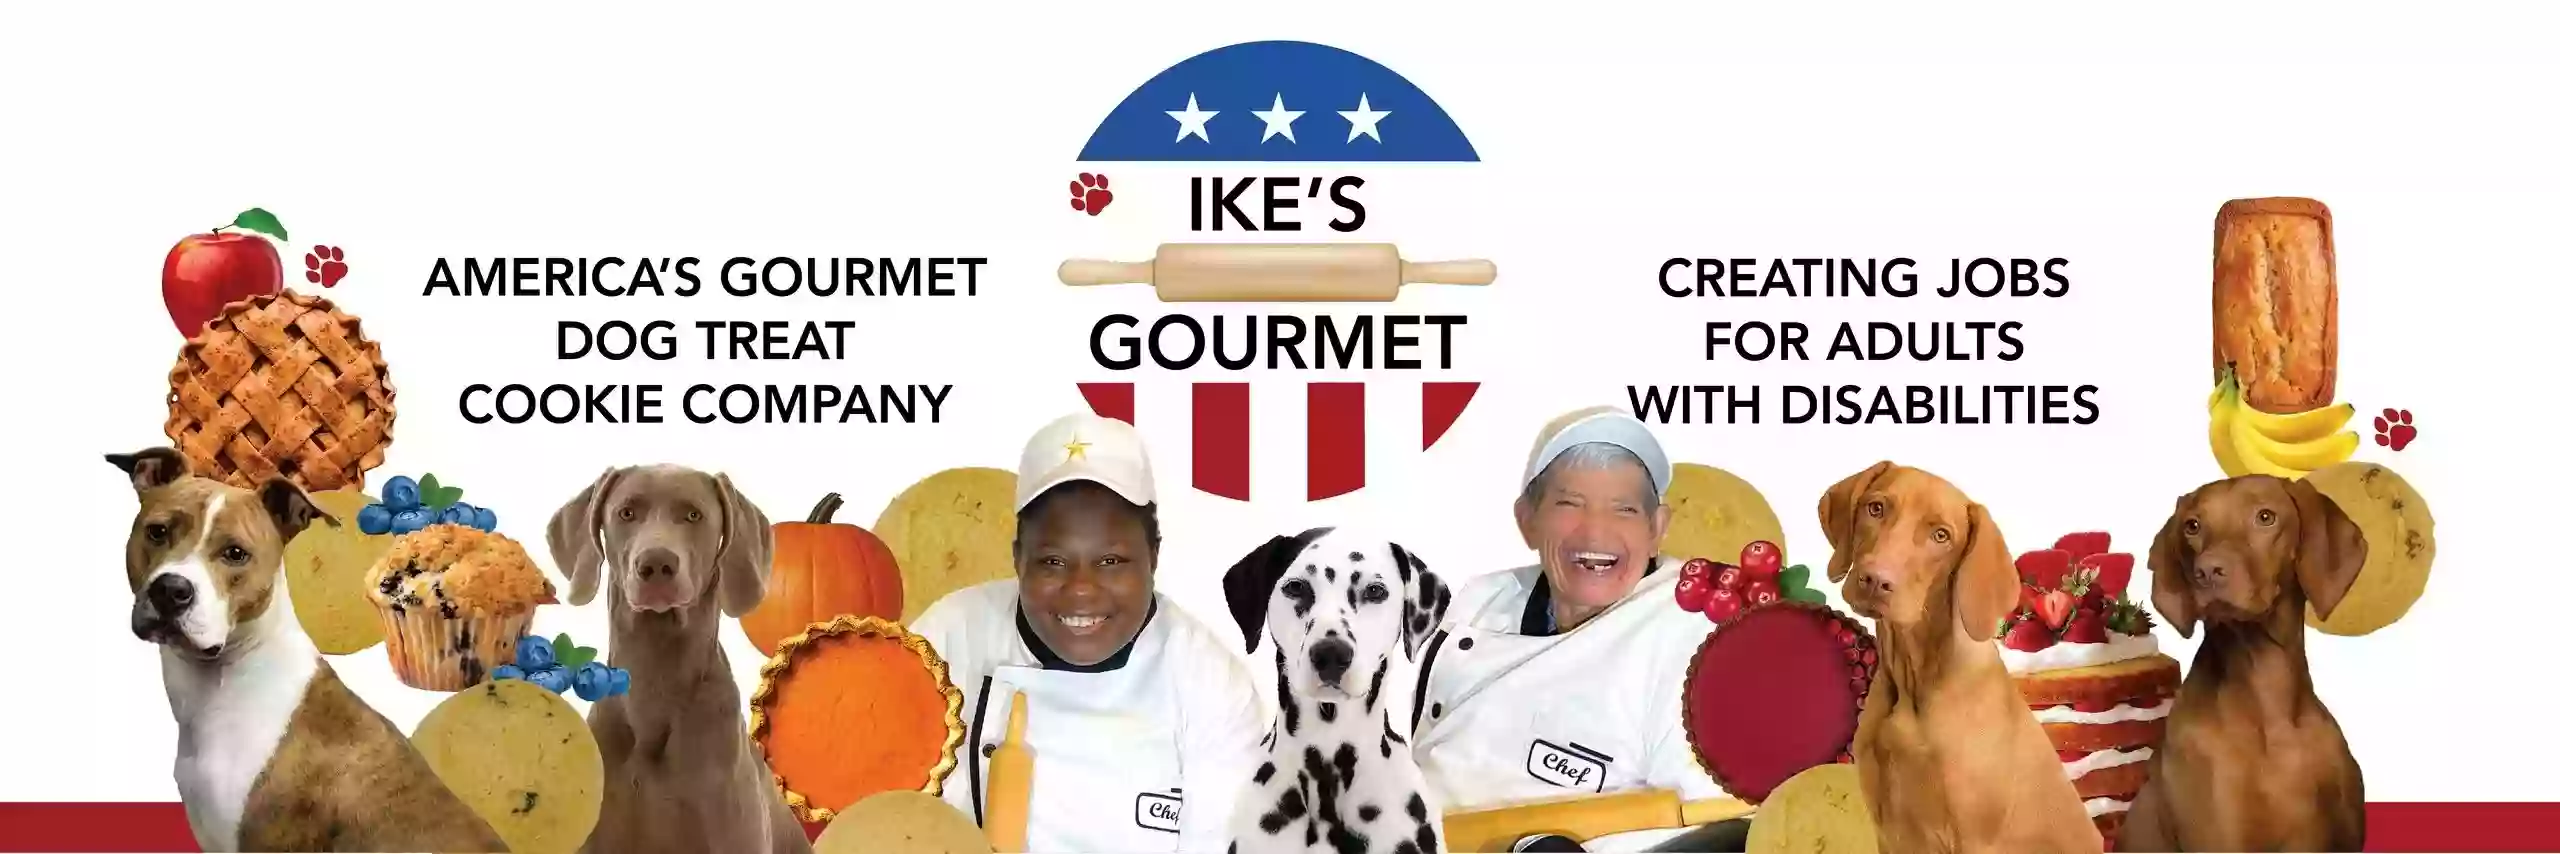 Ike's Gourmet